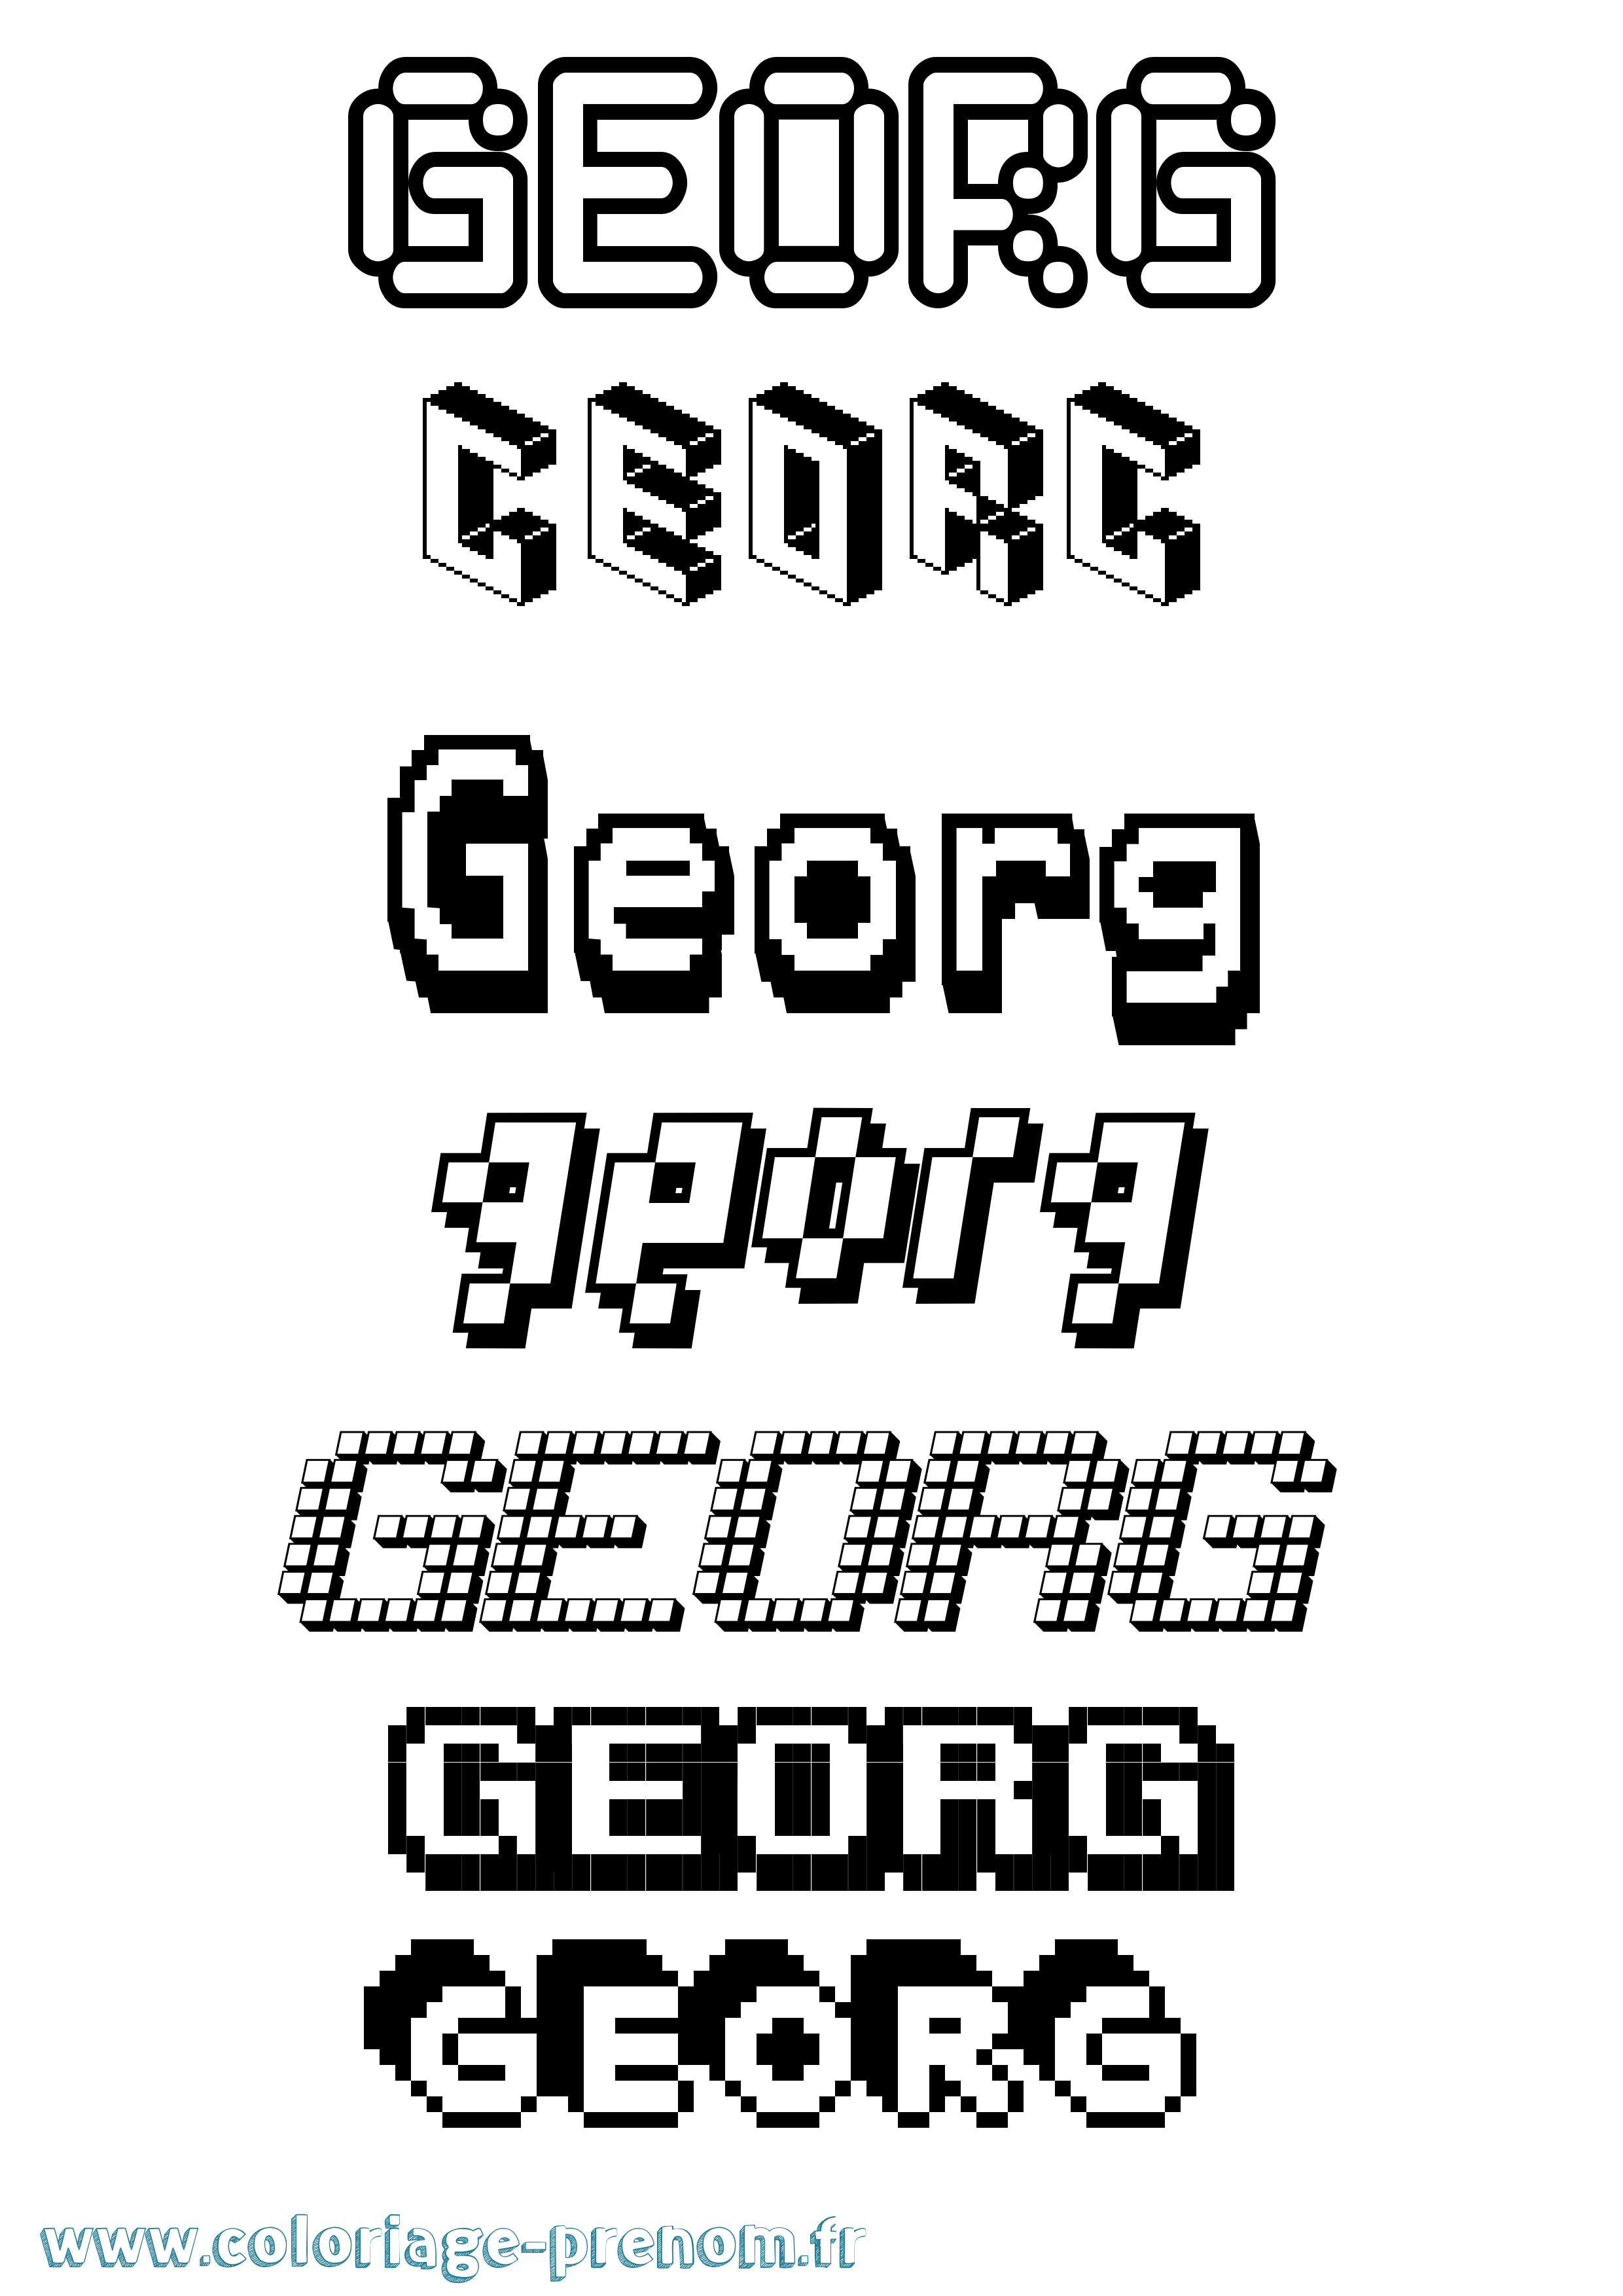 Coloriage prénom Georg Pixel